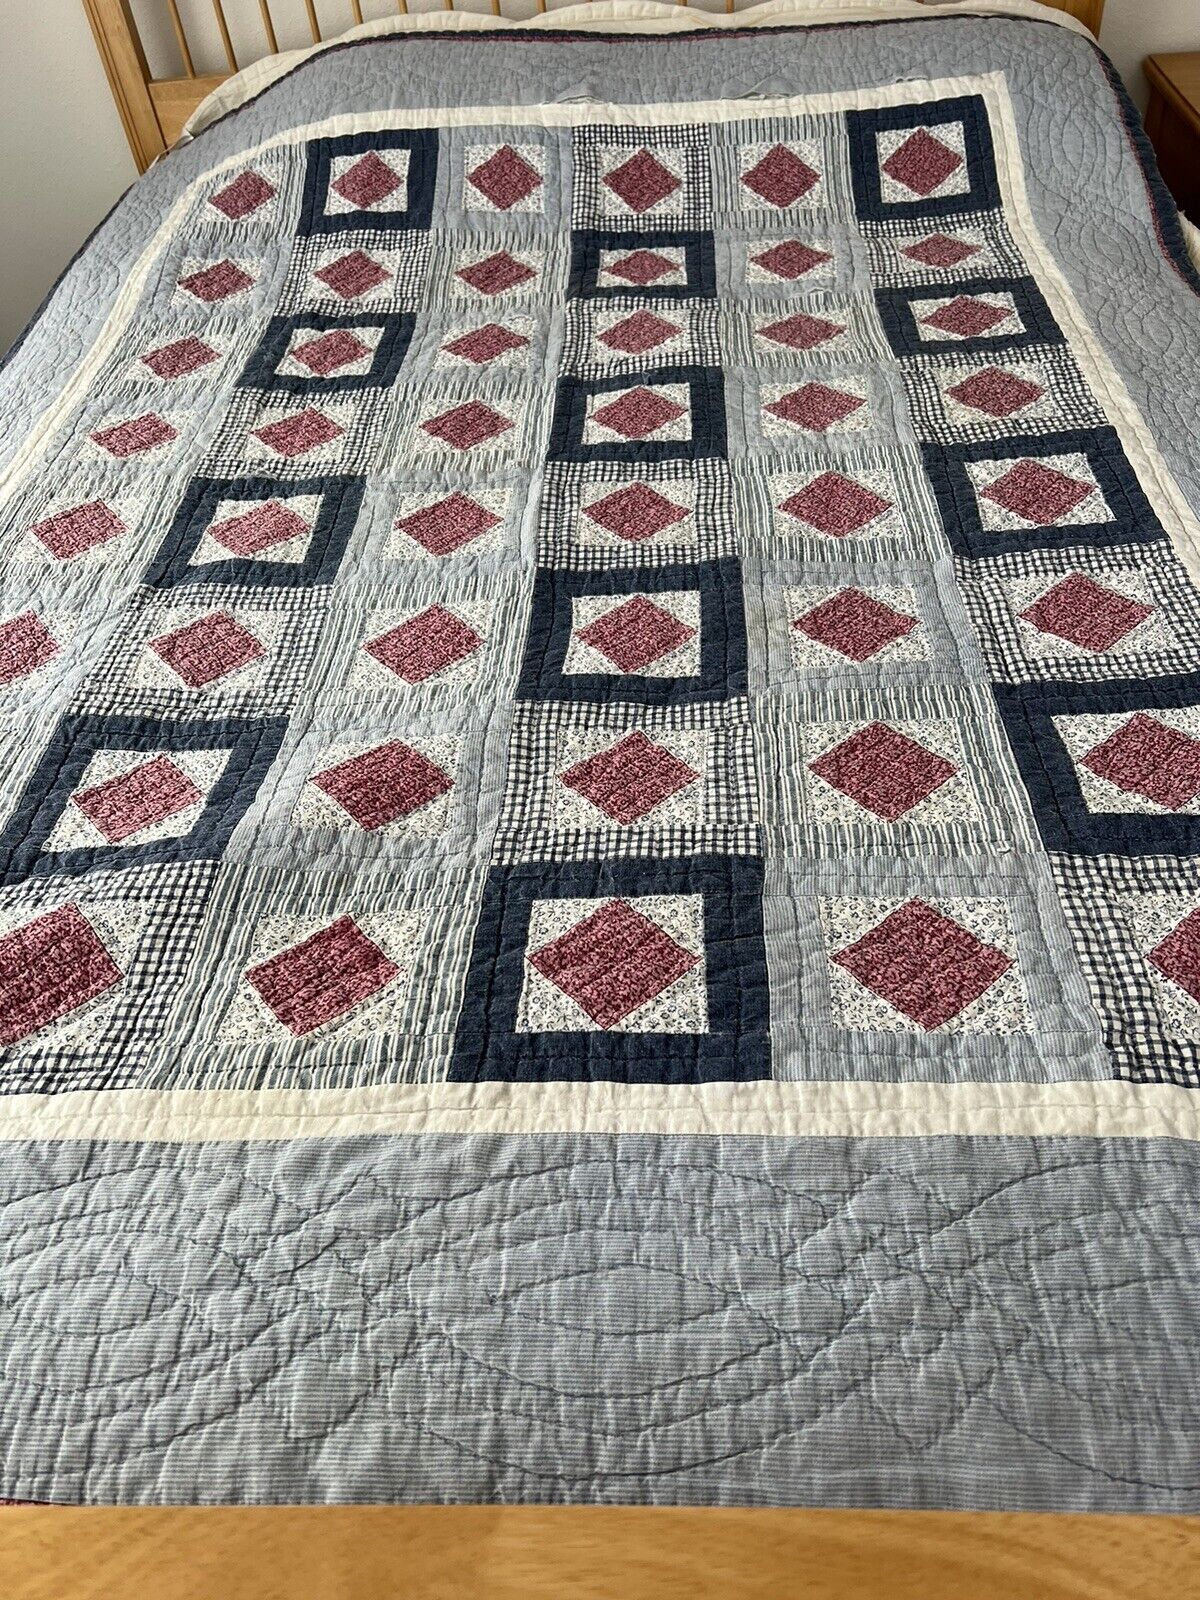 Vintage Cutter Quilt, Blue & Mauve, Great for Pillows, Worn, not Handmade,Crafts